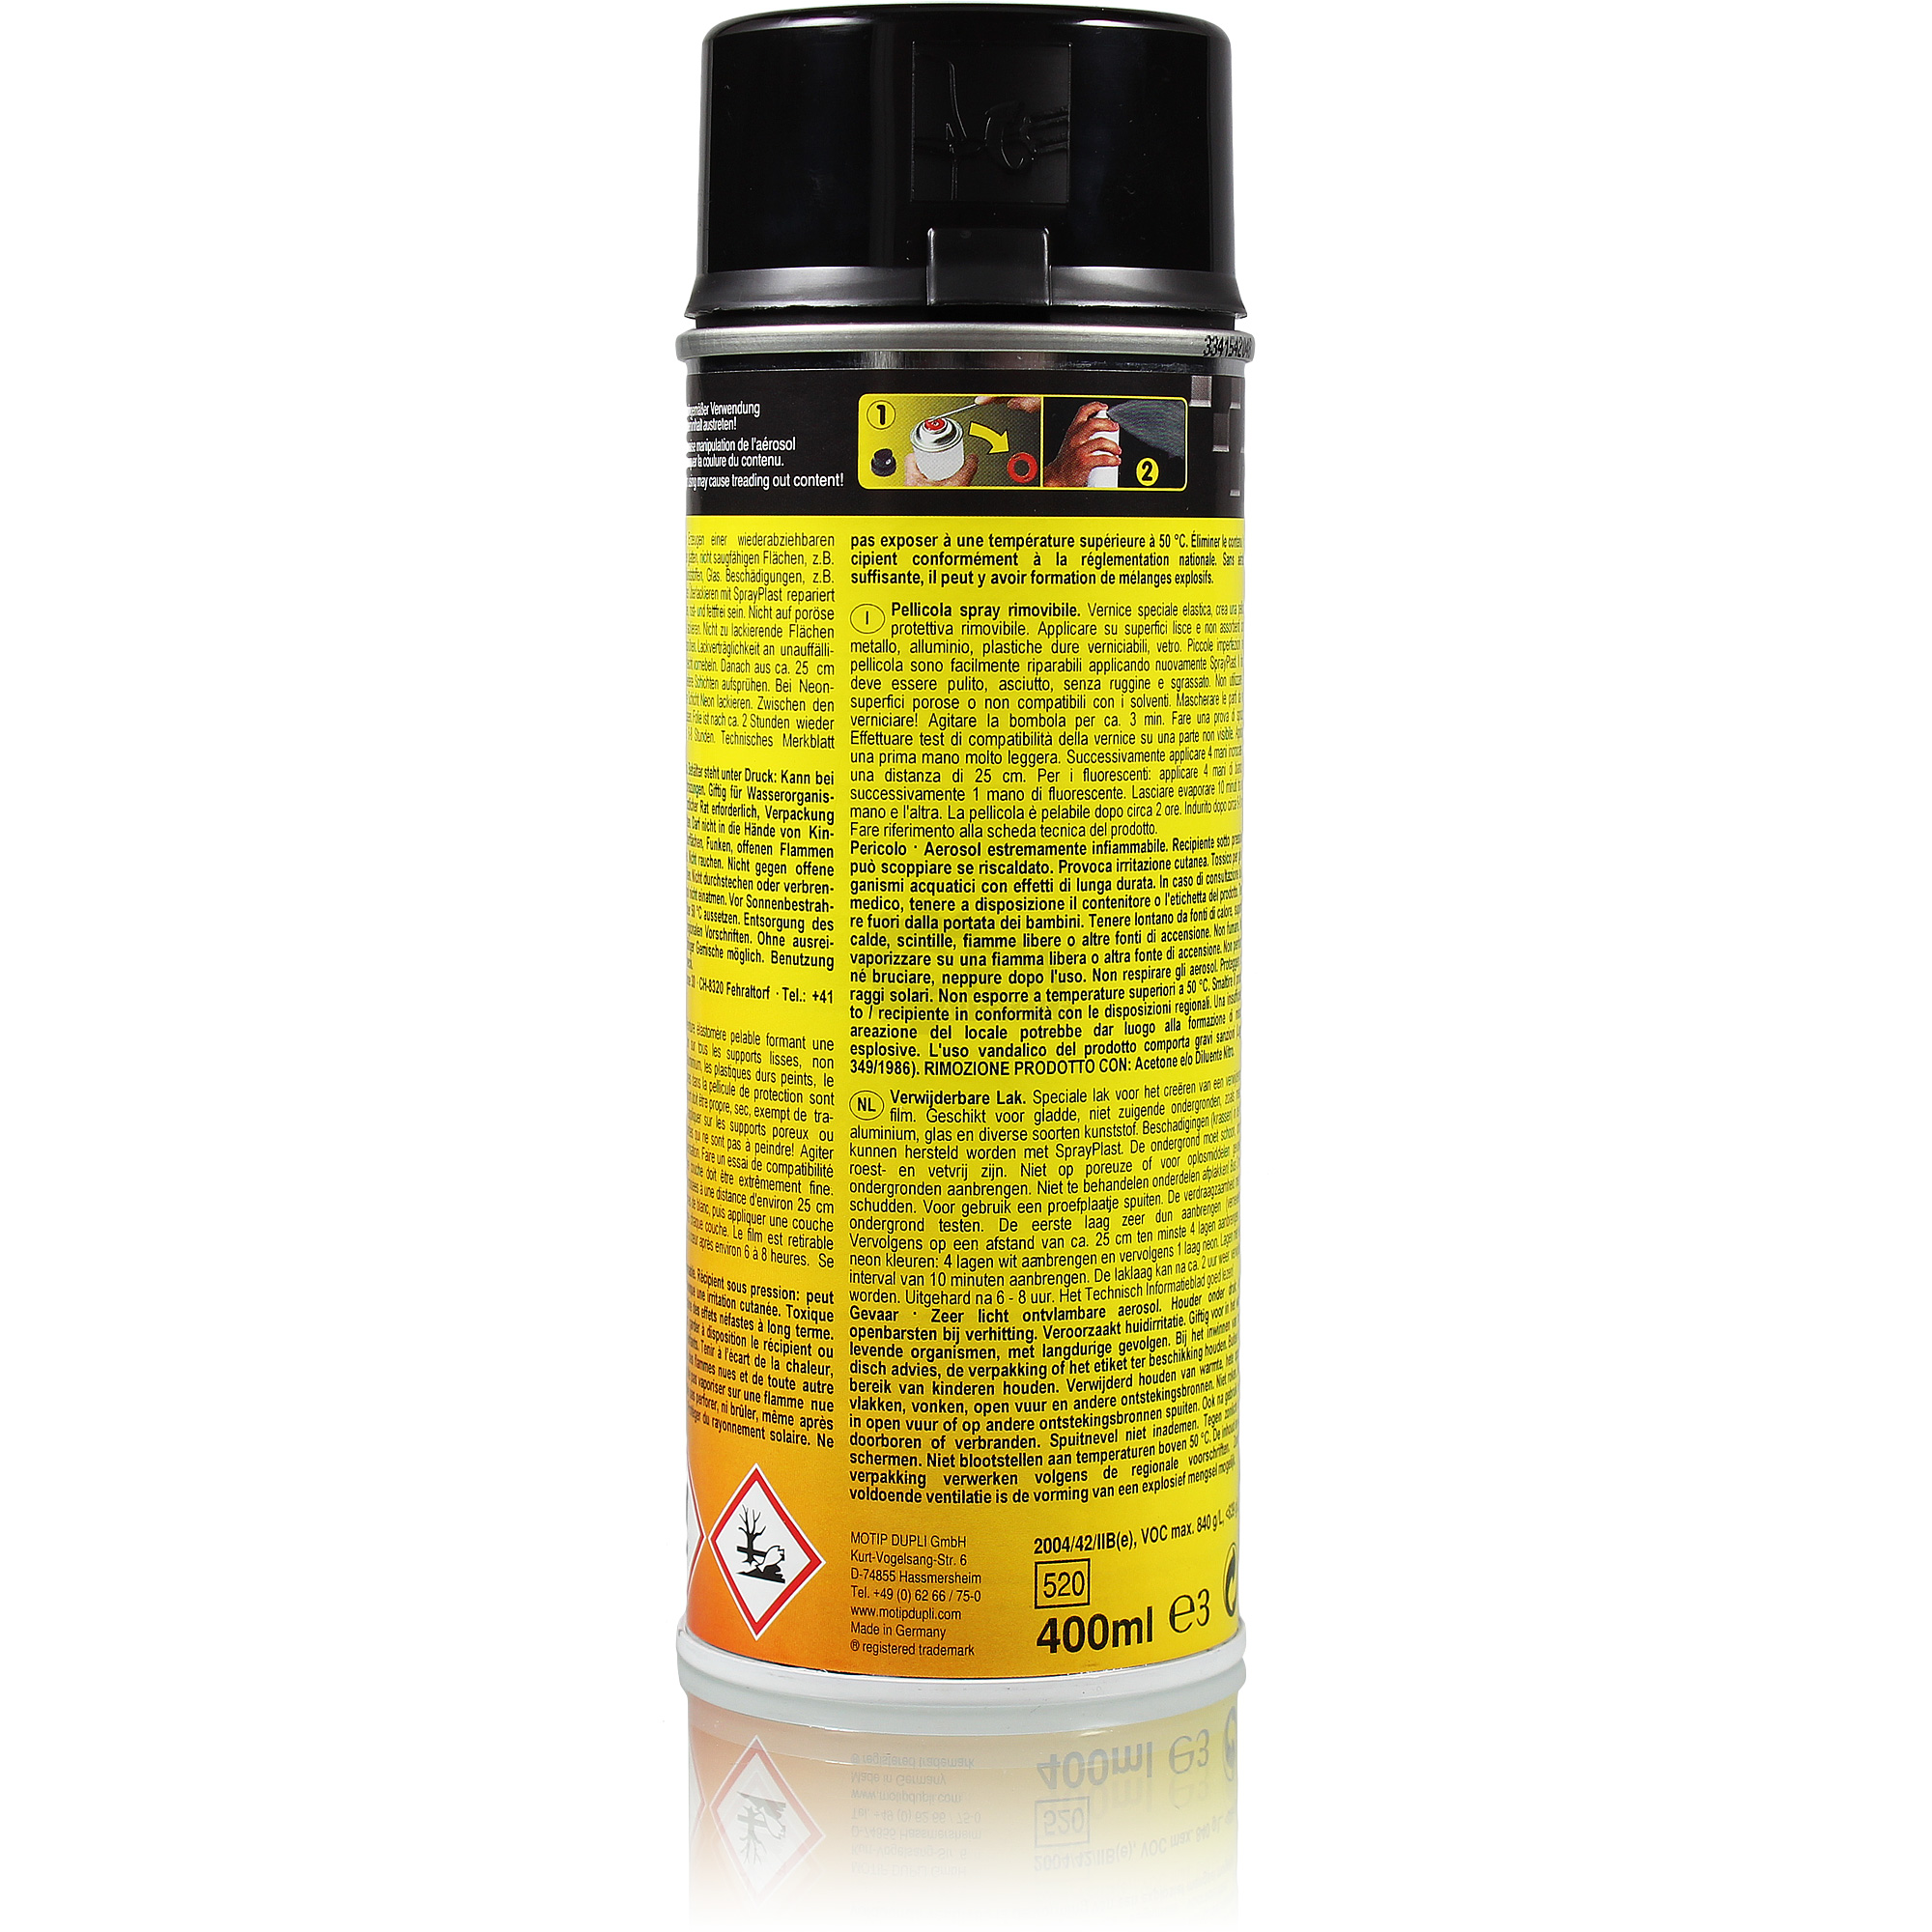 Dupli Color Sprayplast (Sprühfolie) - schwarz - seidenglänzend - 400m,  15,79 €